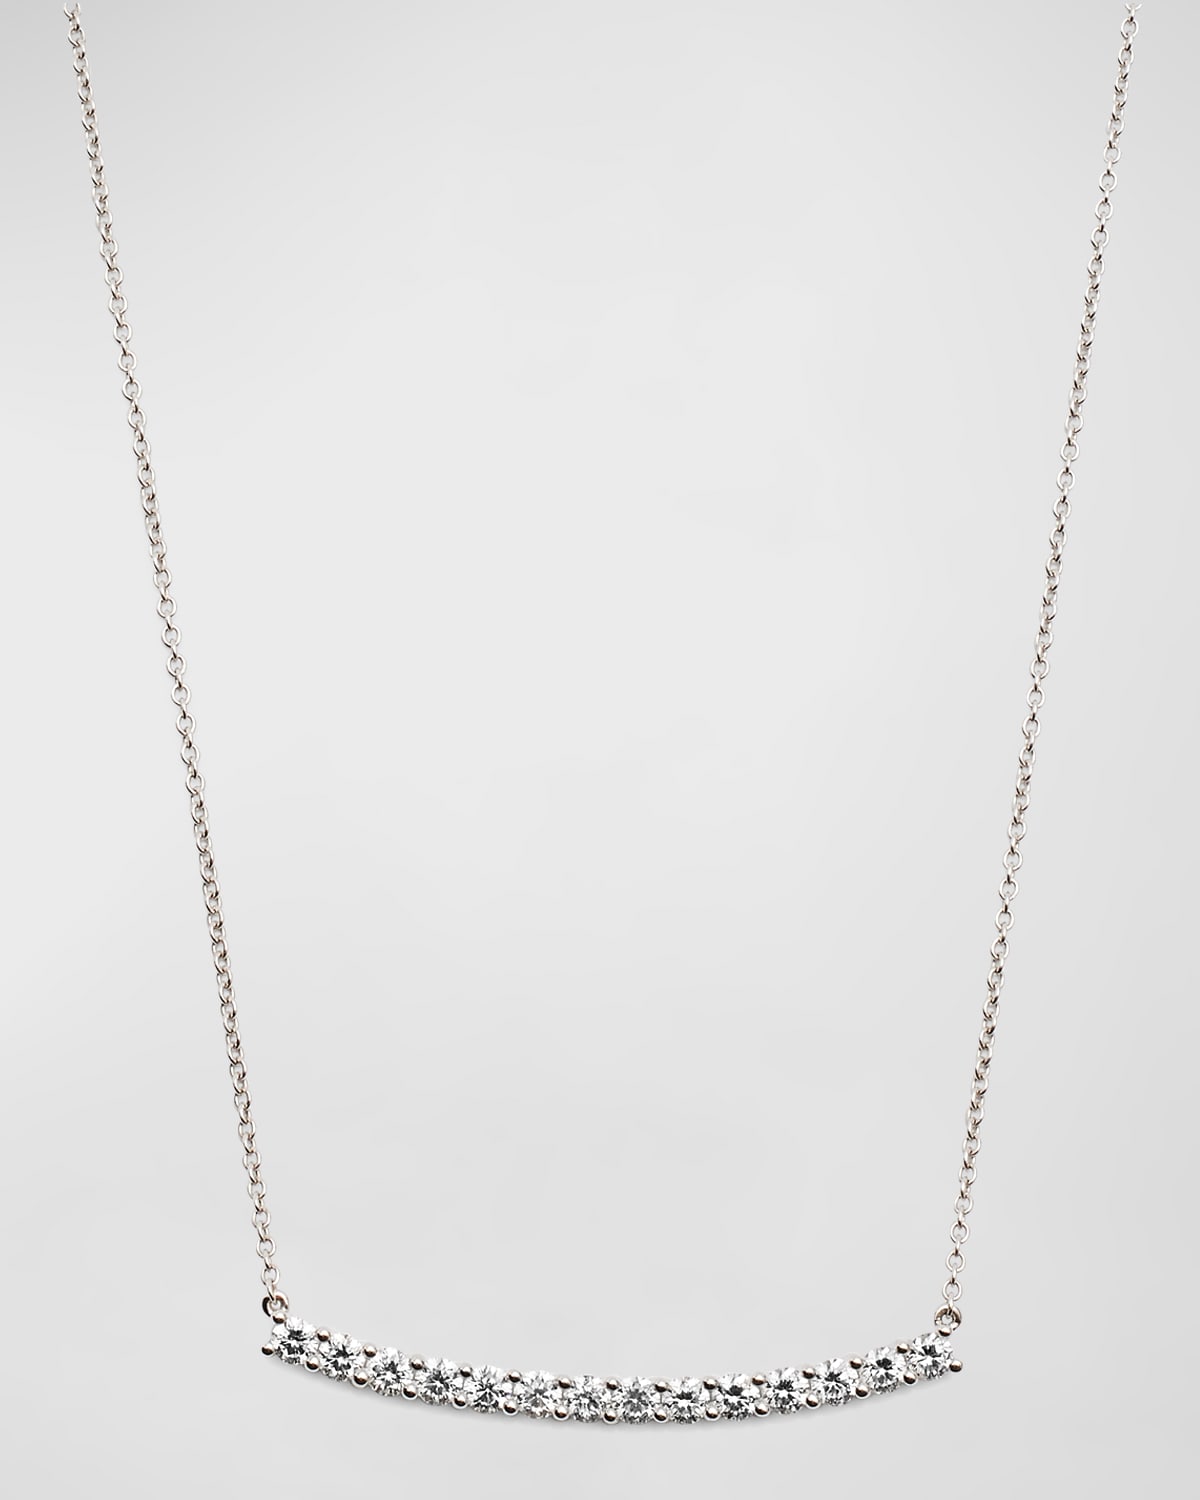 18k White Gold Large Diamond Bar Pendant Necklace